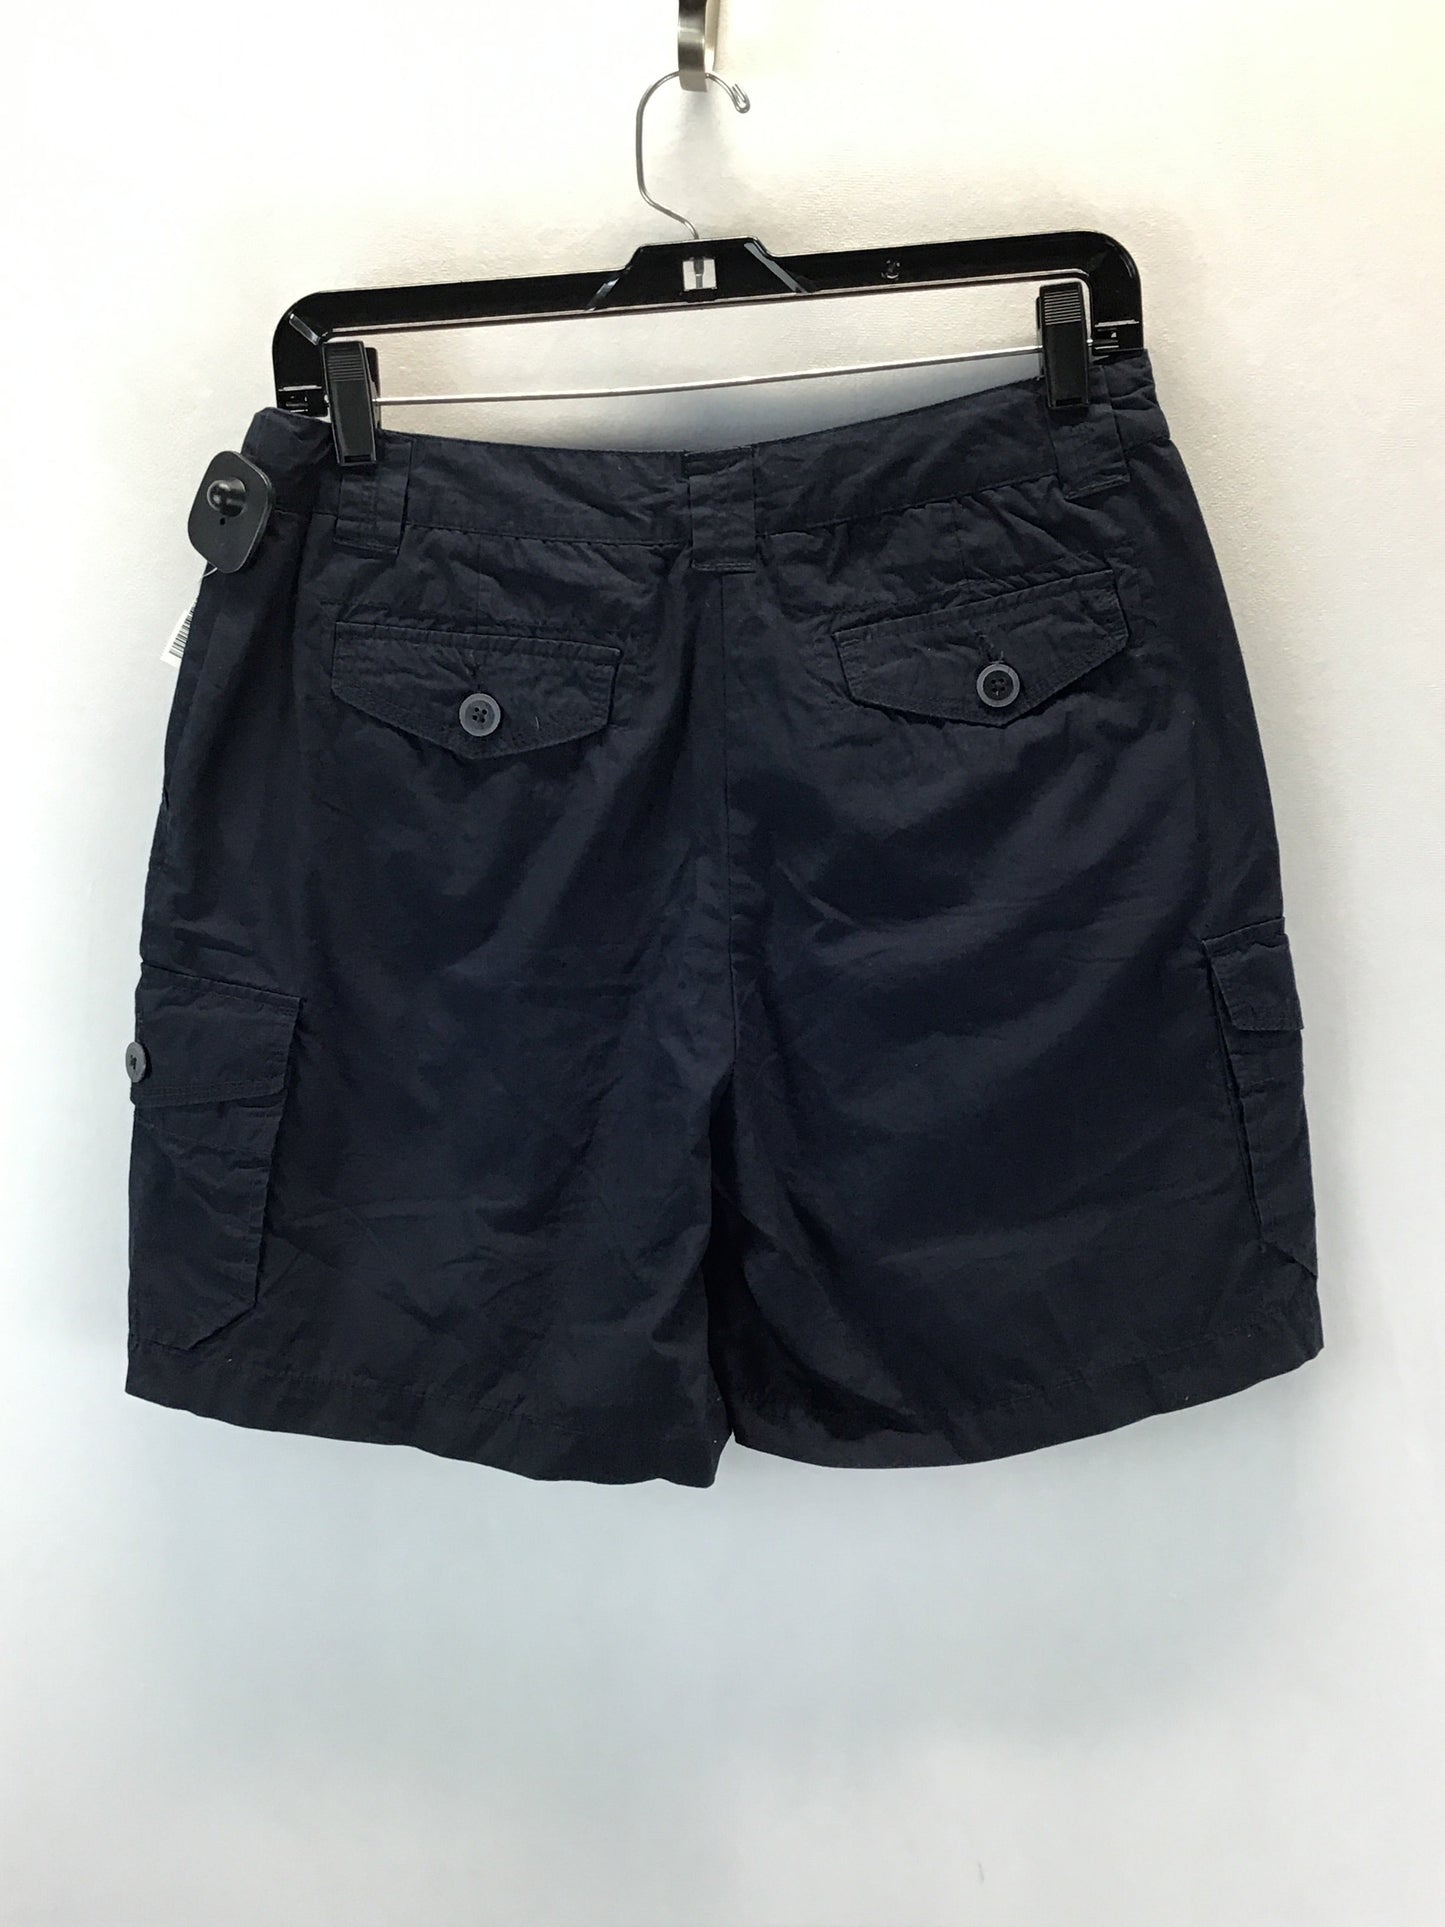 Shorts By Susan Bristol  Size: 6